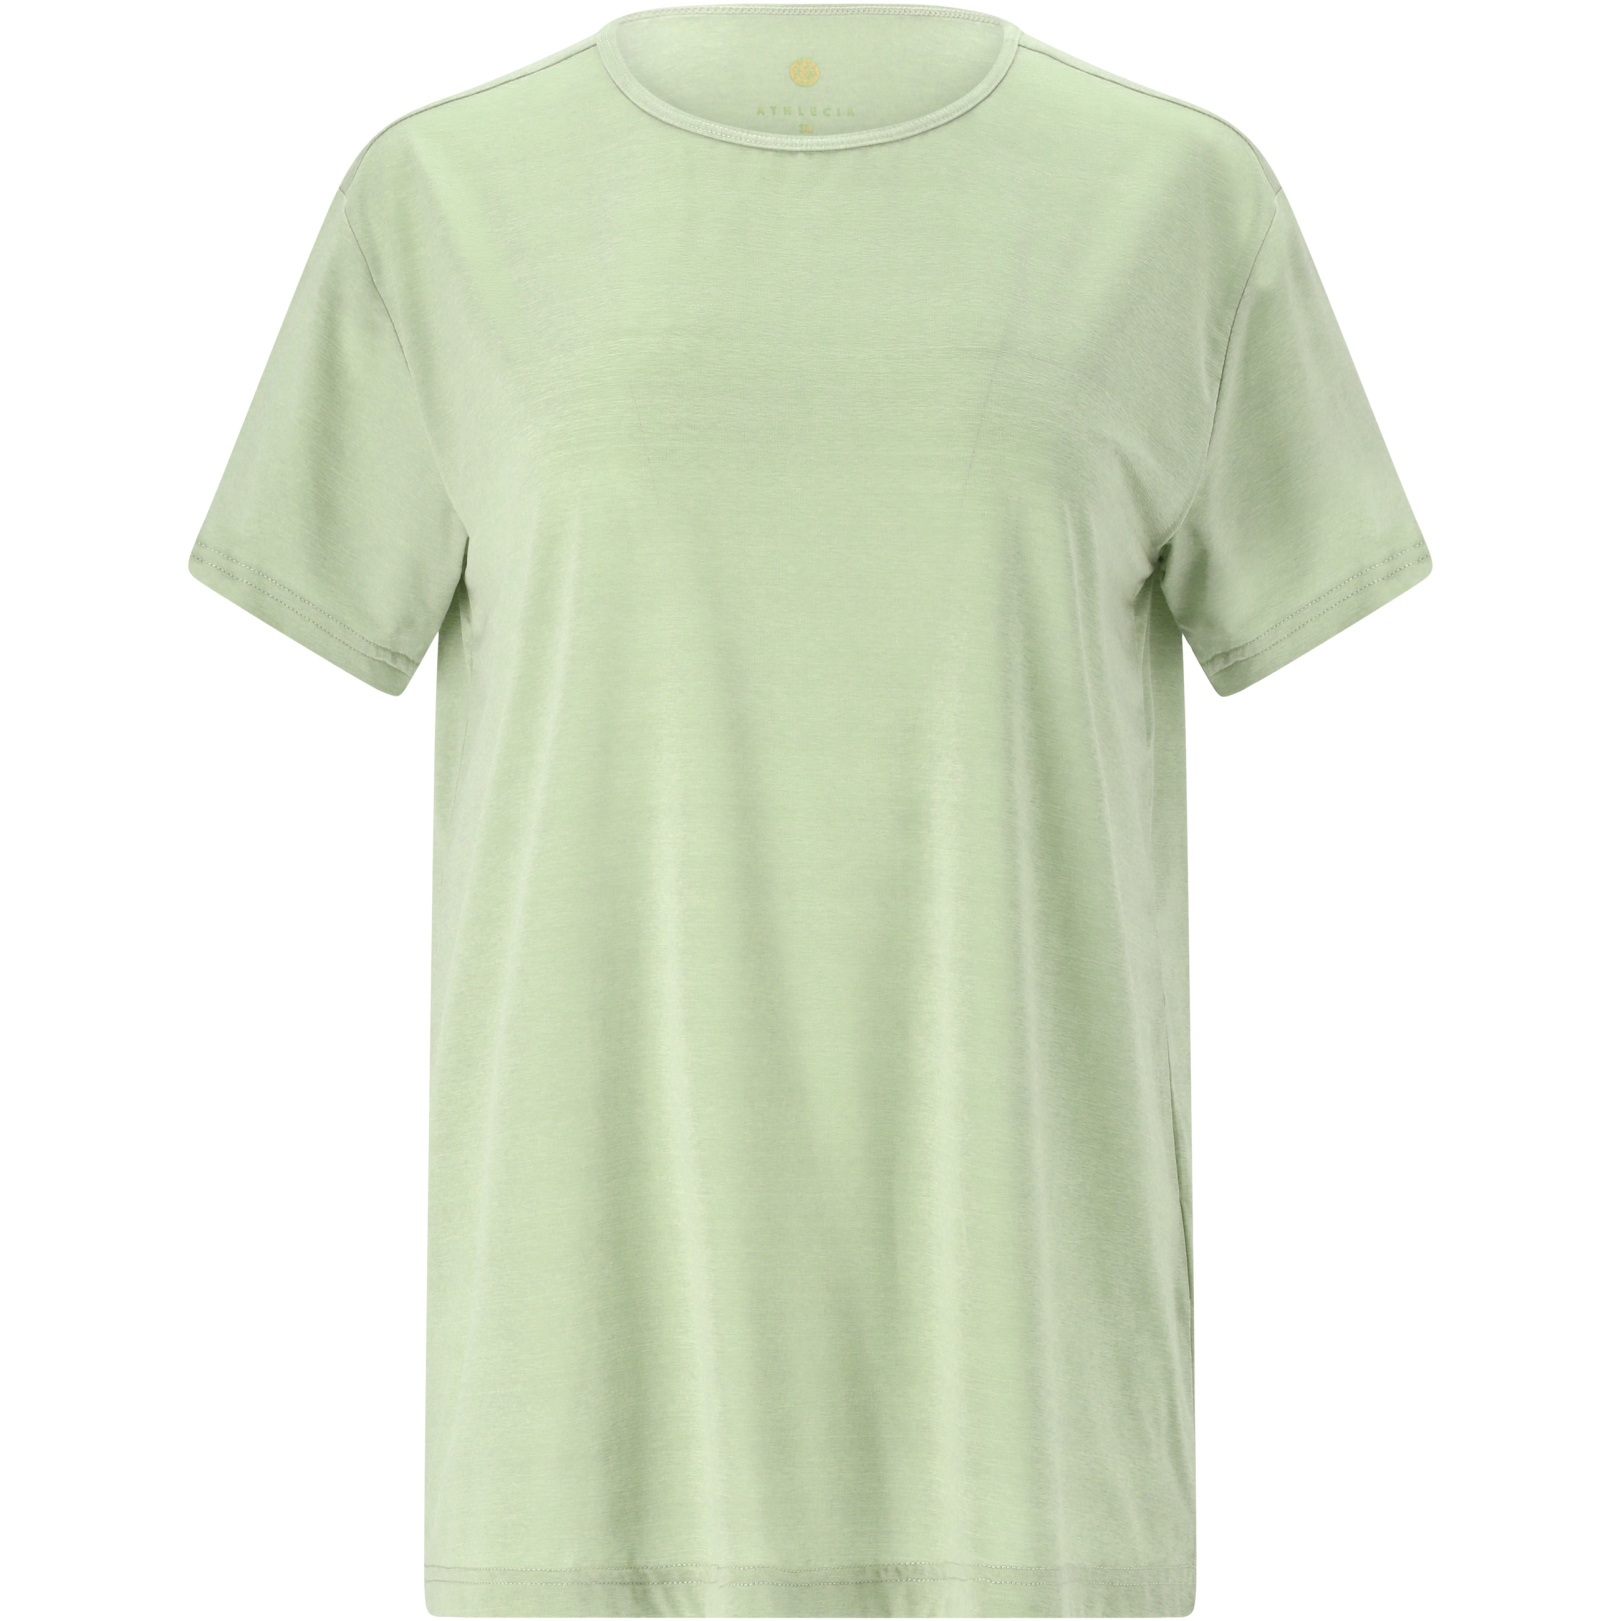 Productfoto van Athlecia Lizzy Slub T-Shirt Dames - Green Lily